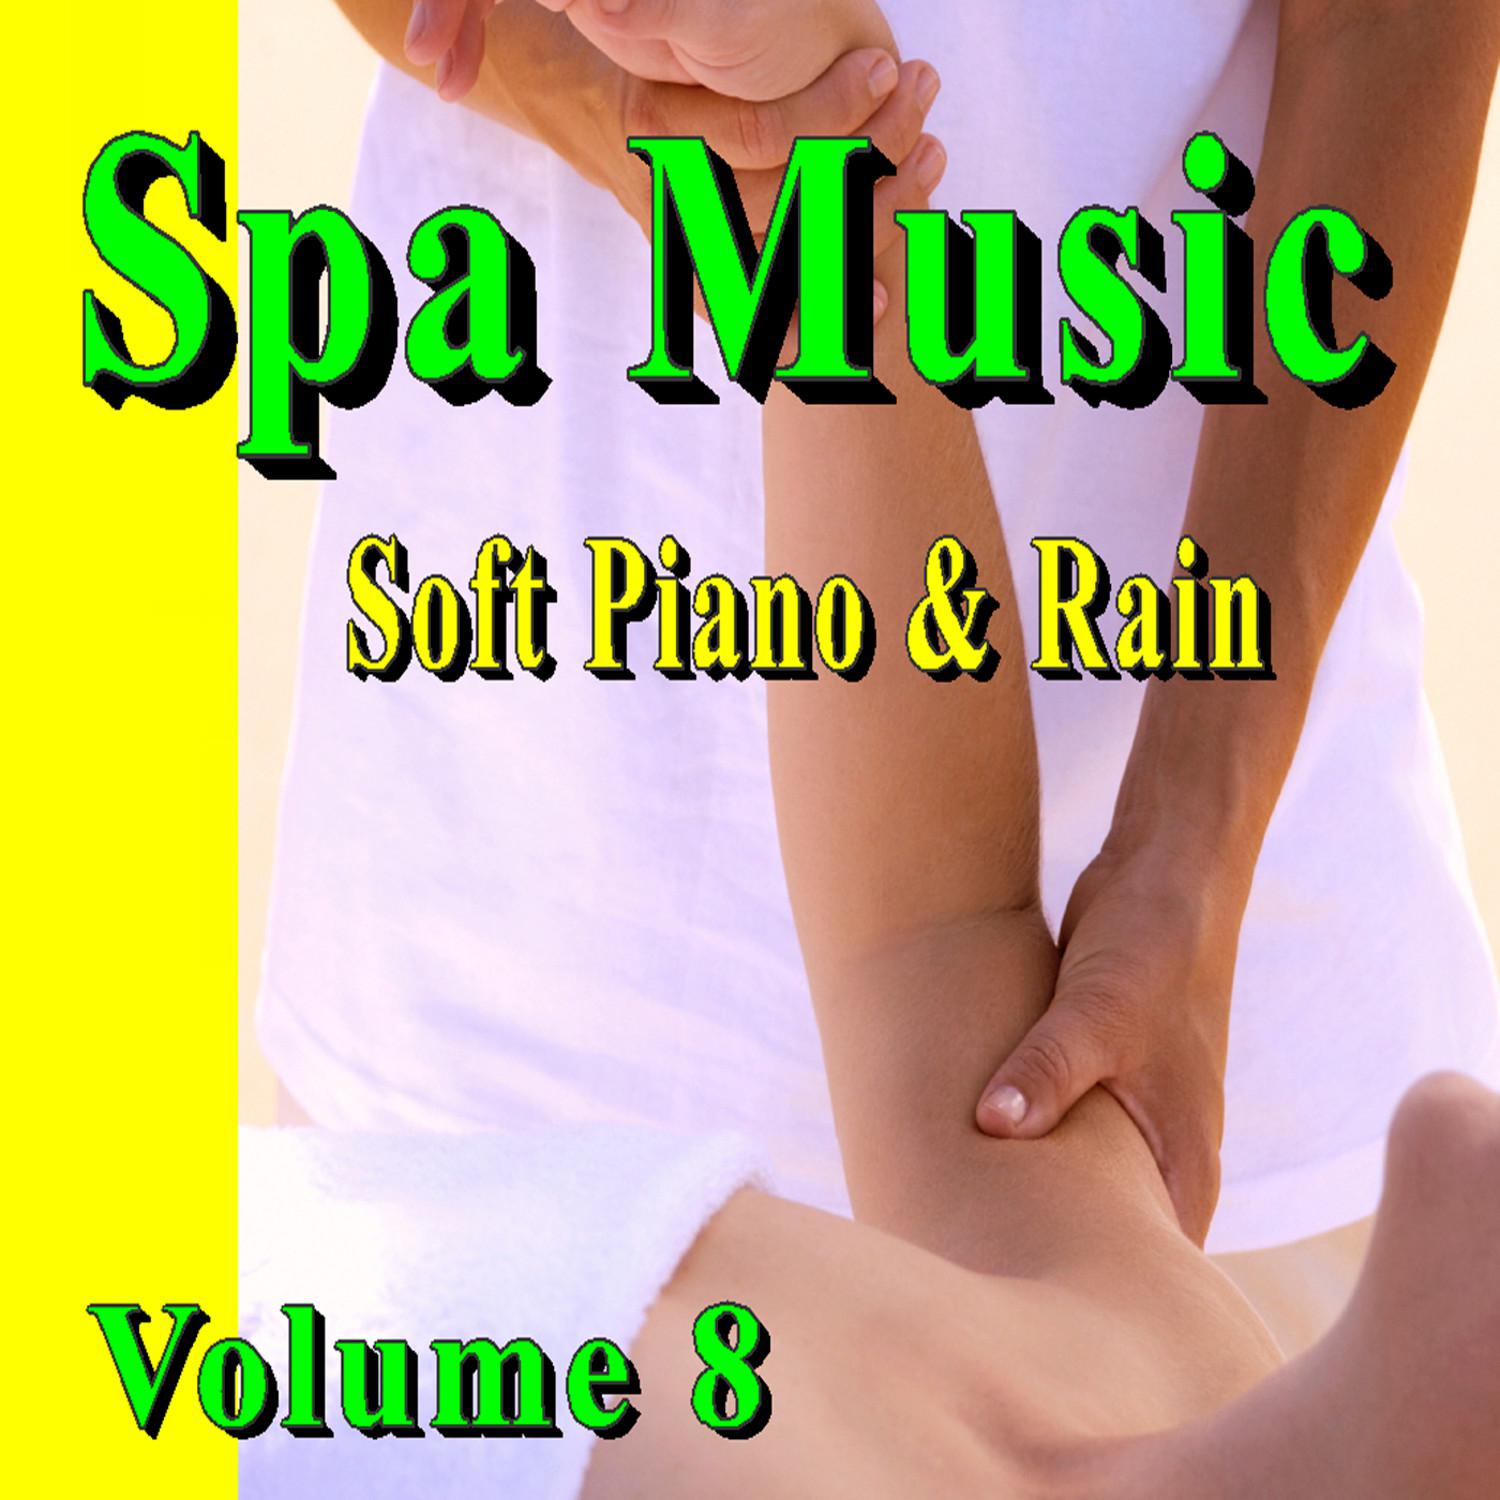 Spa Music (Soft Piano & Rain) Volume 8